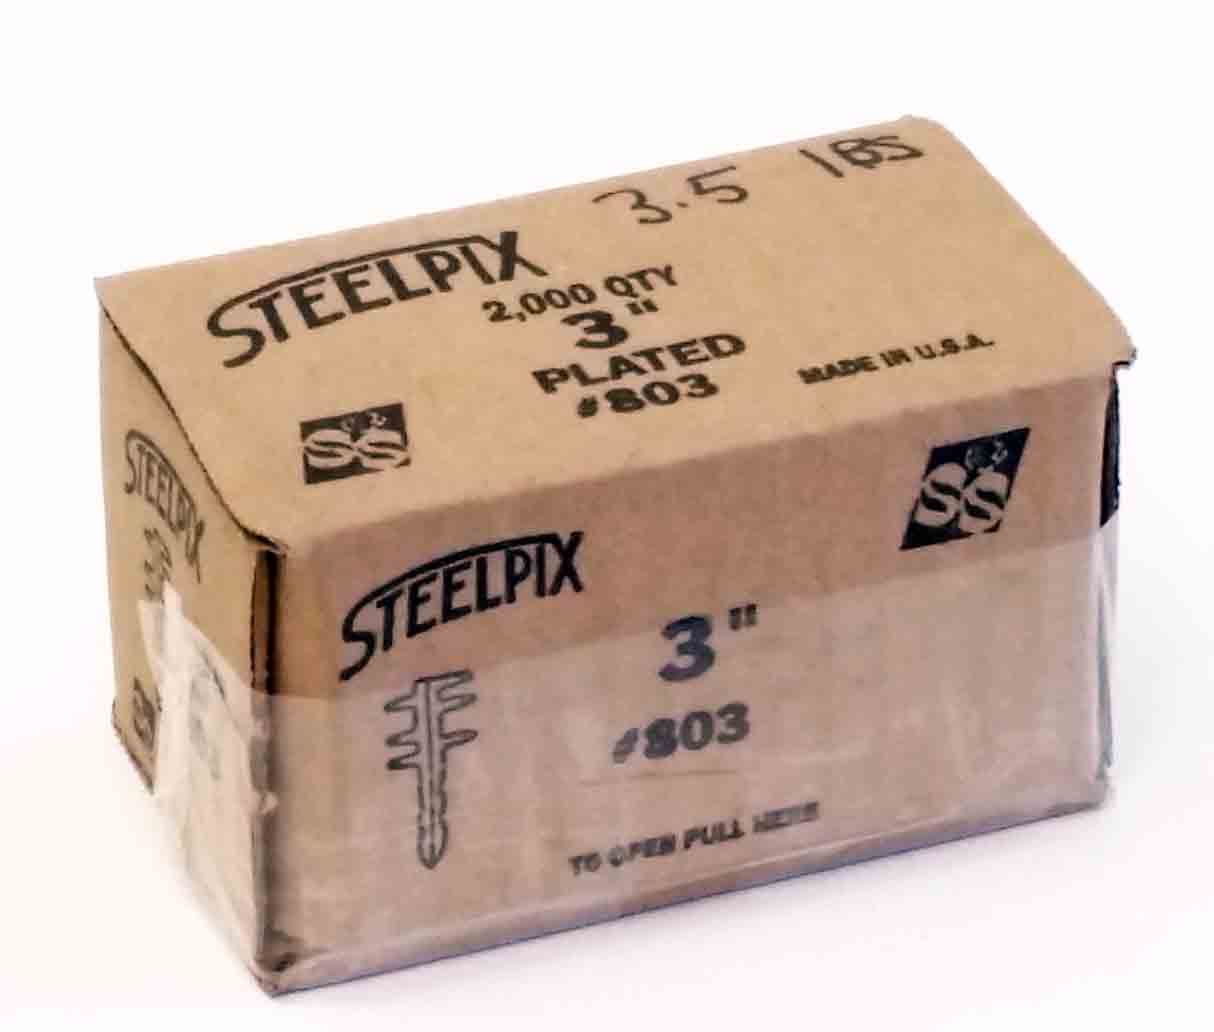 803 - 3" Steel Pix  - 31.50 box of 2,000